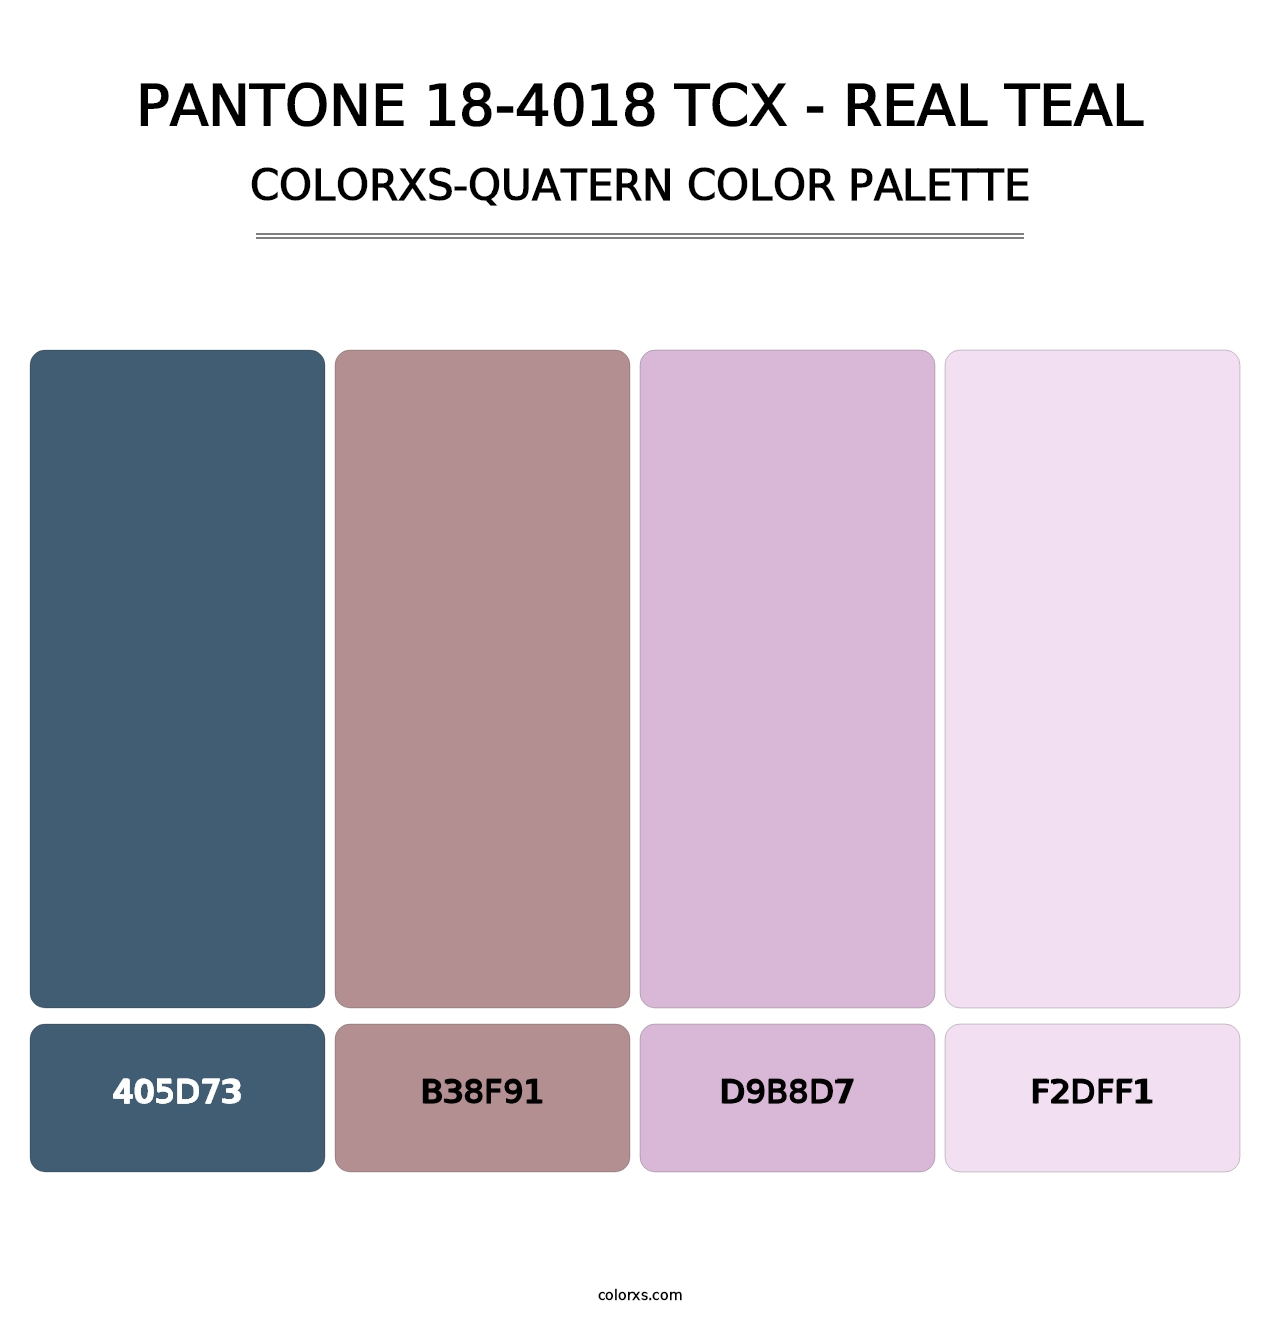 PANTONE 18-4018 TCX - Real Teal - Colorxs Quatern Palette